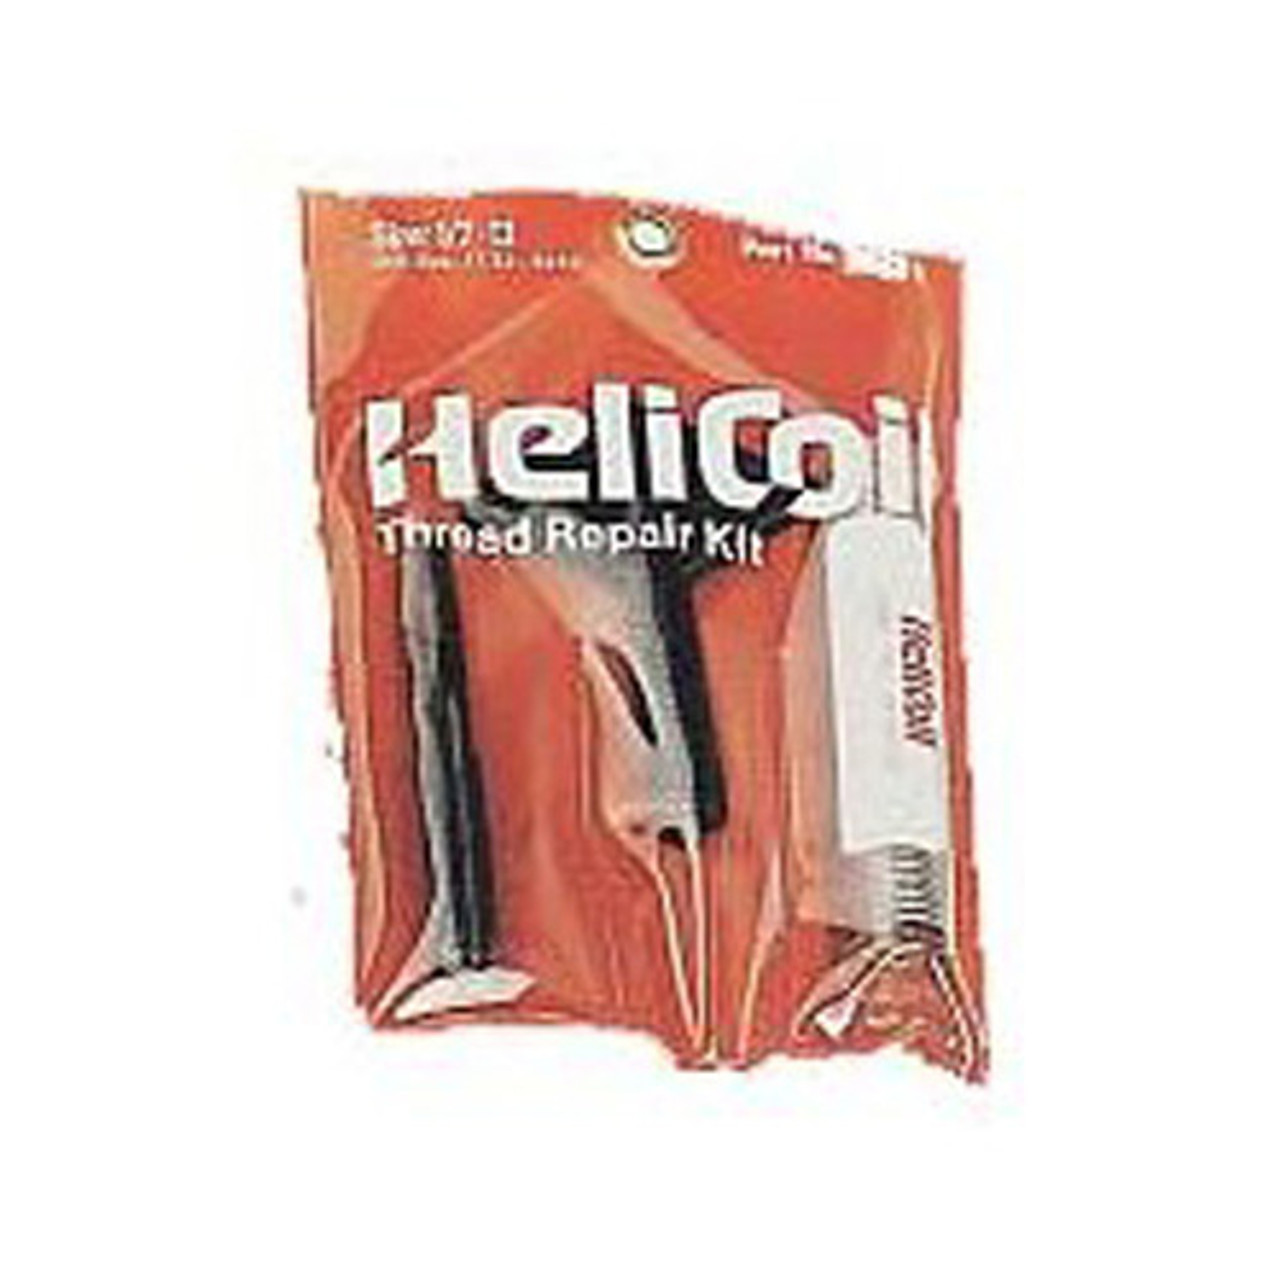 Helicoil 5546-6 Kit de reparación de roscas, 6 mm x 1,00 NC